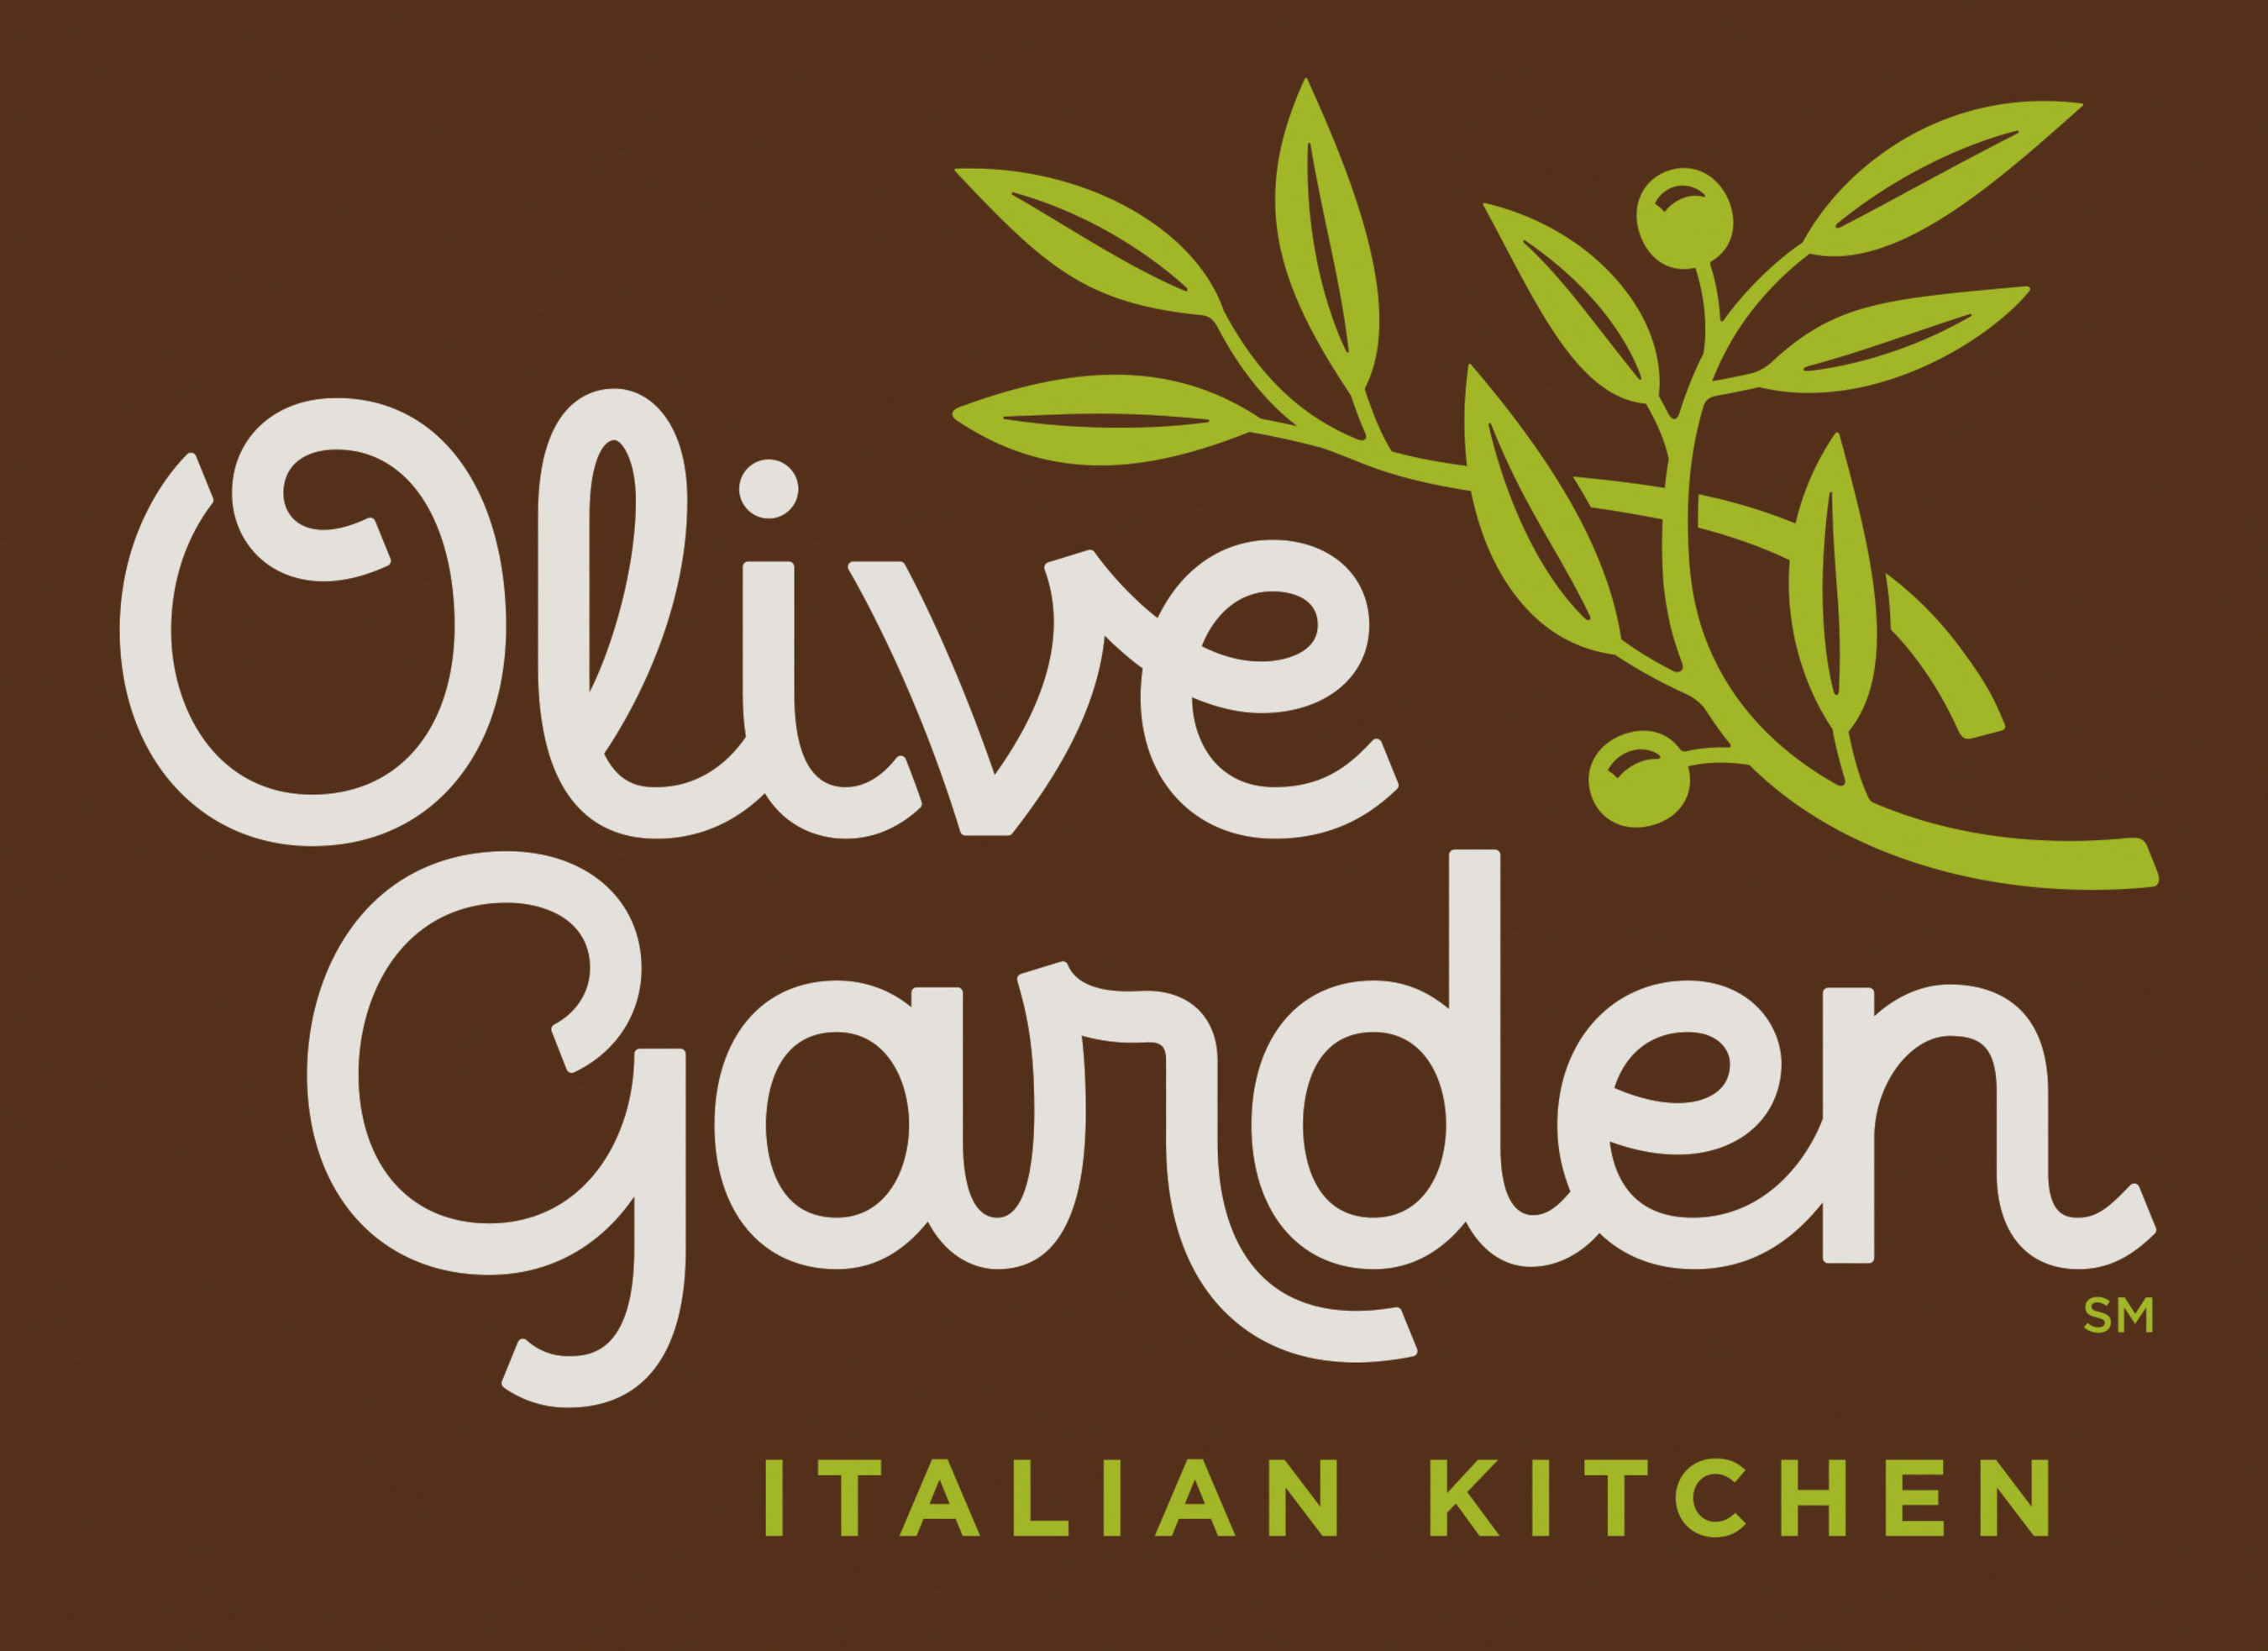 The Olive Garden logo